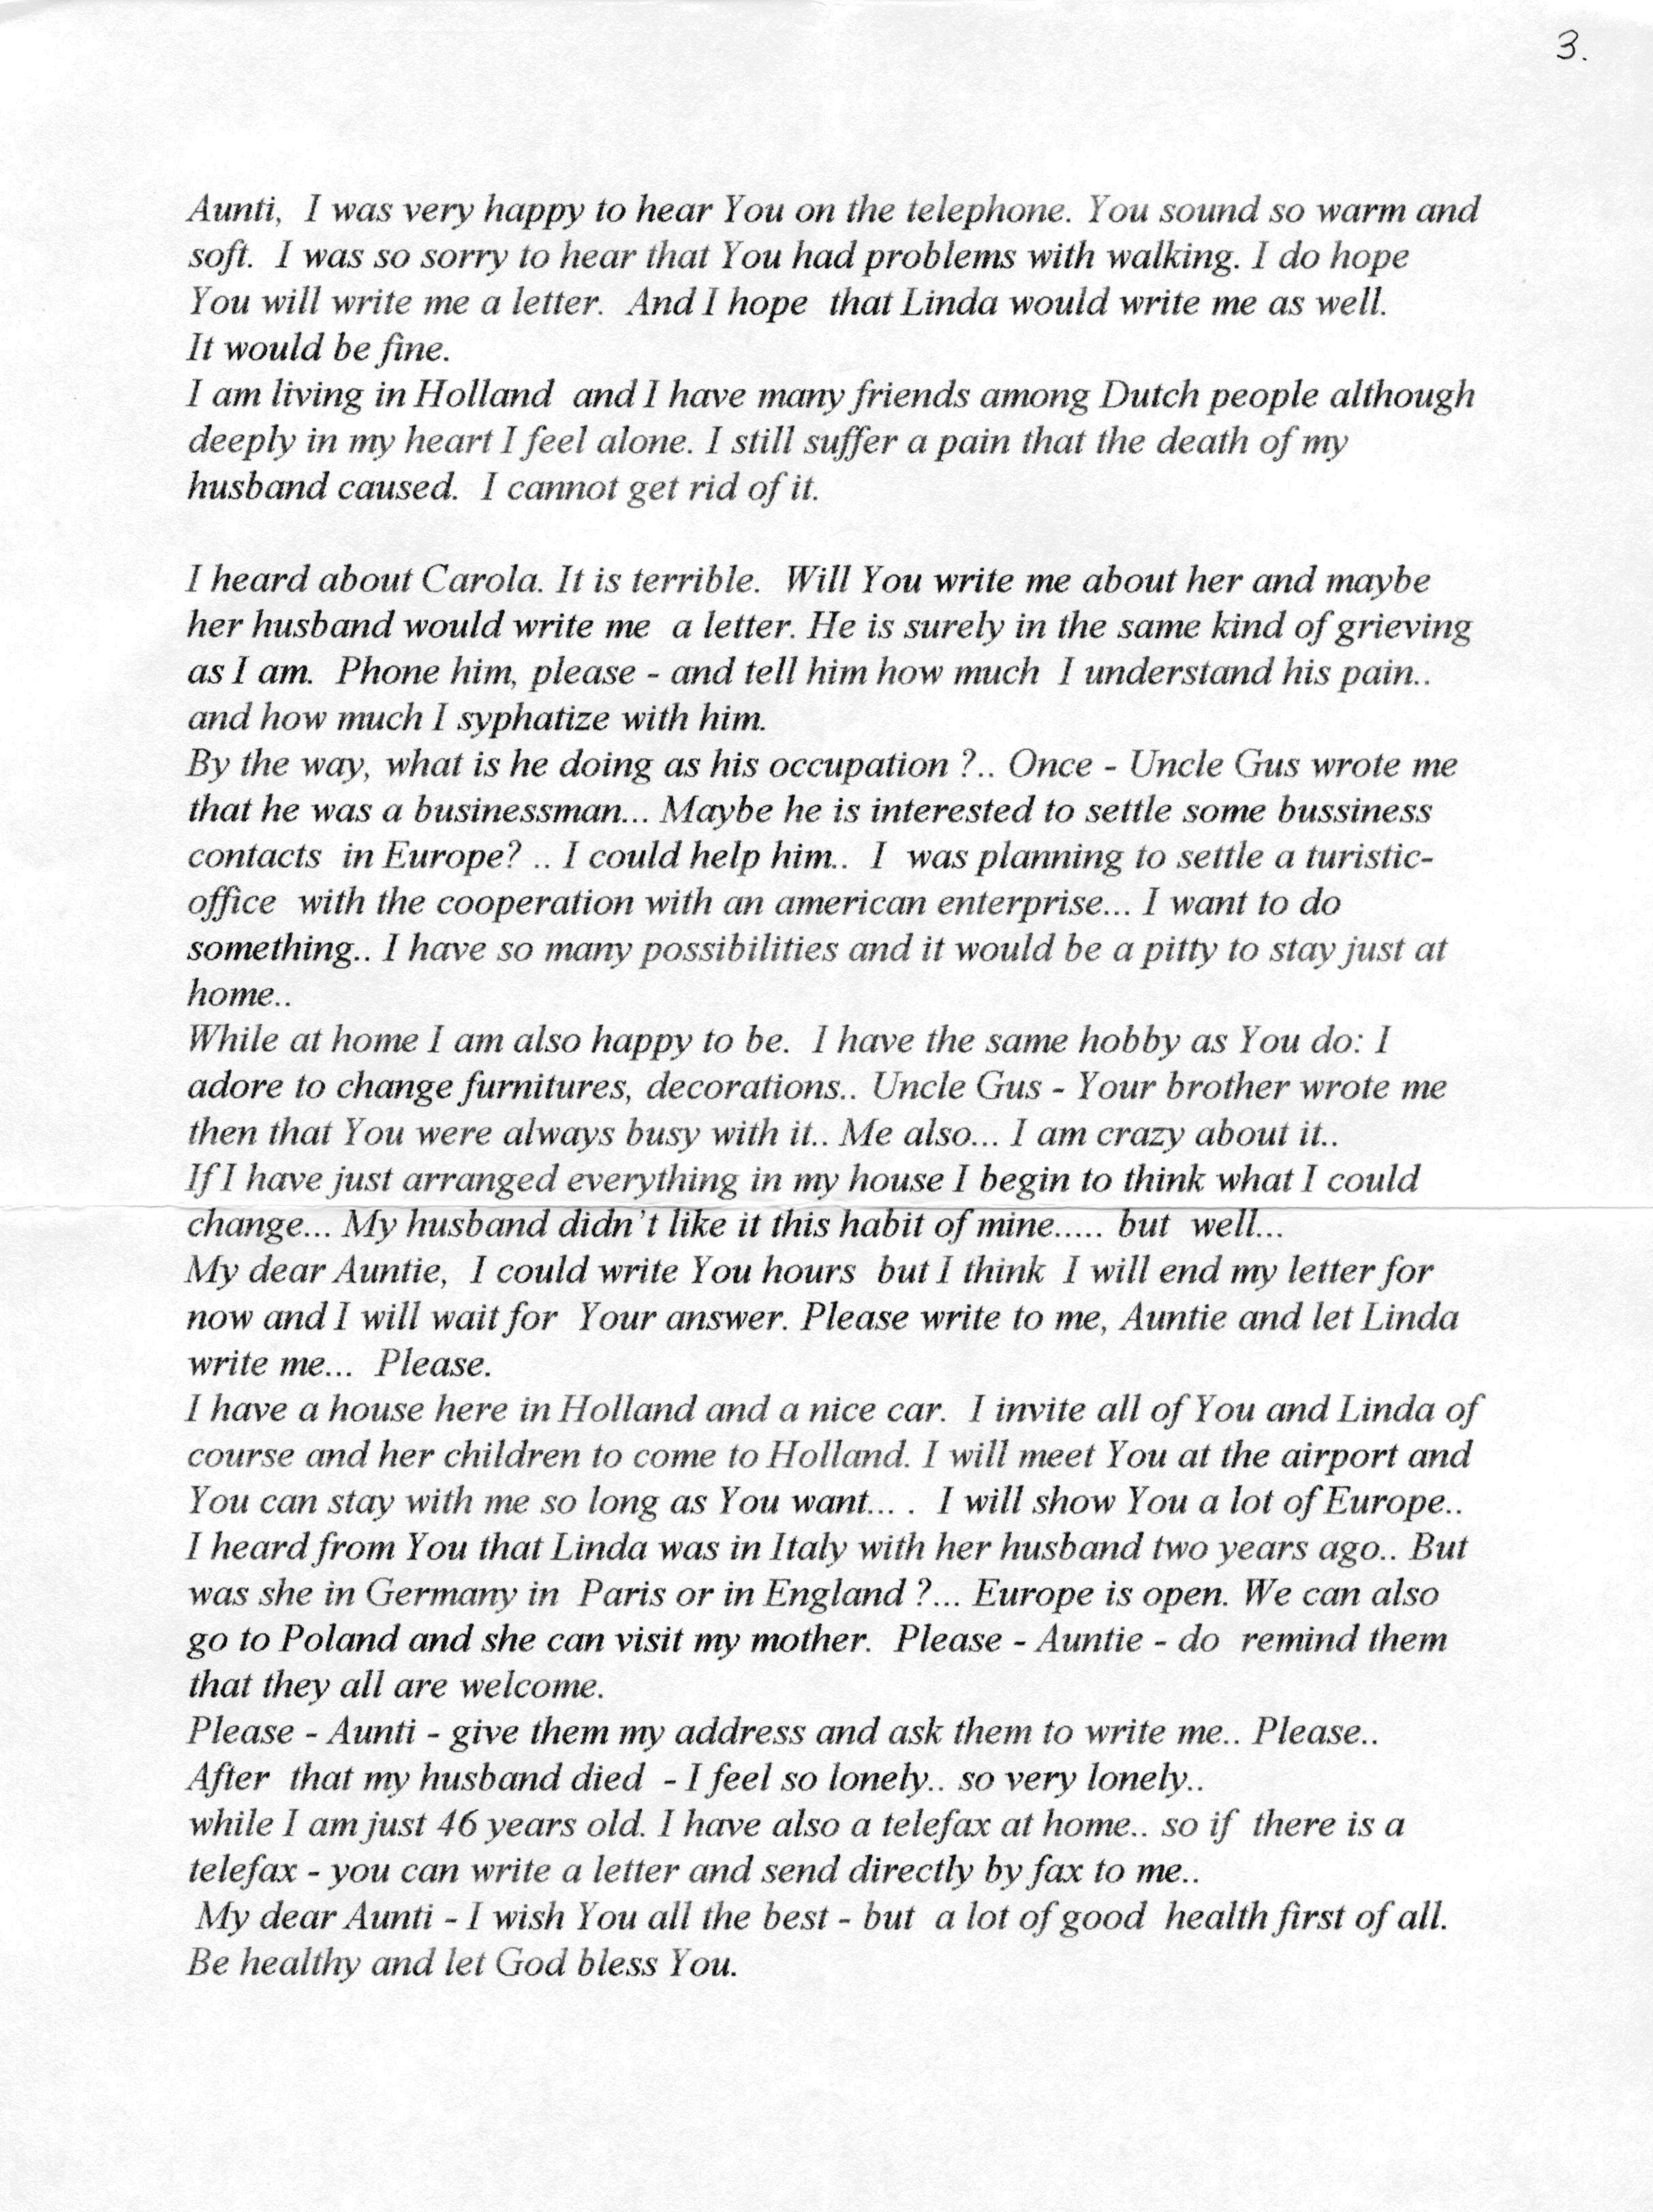 Barbara Wagenaar Letter Page 3.jpg